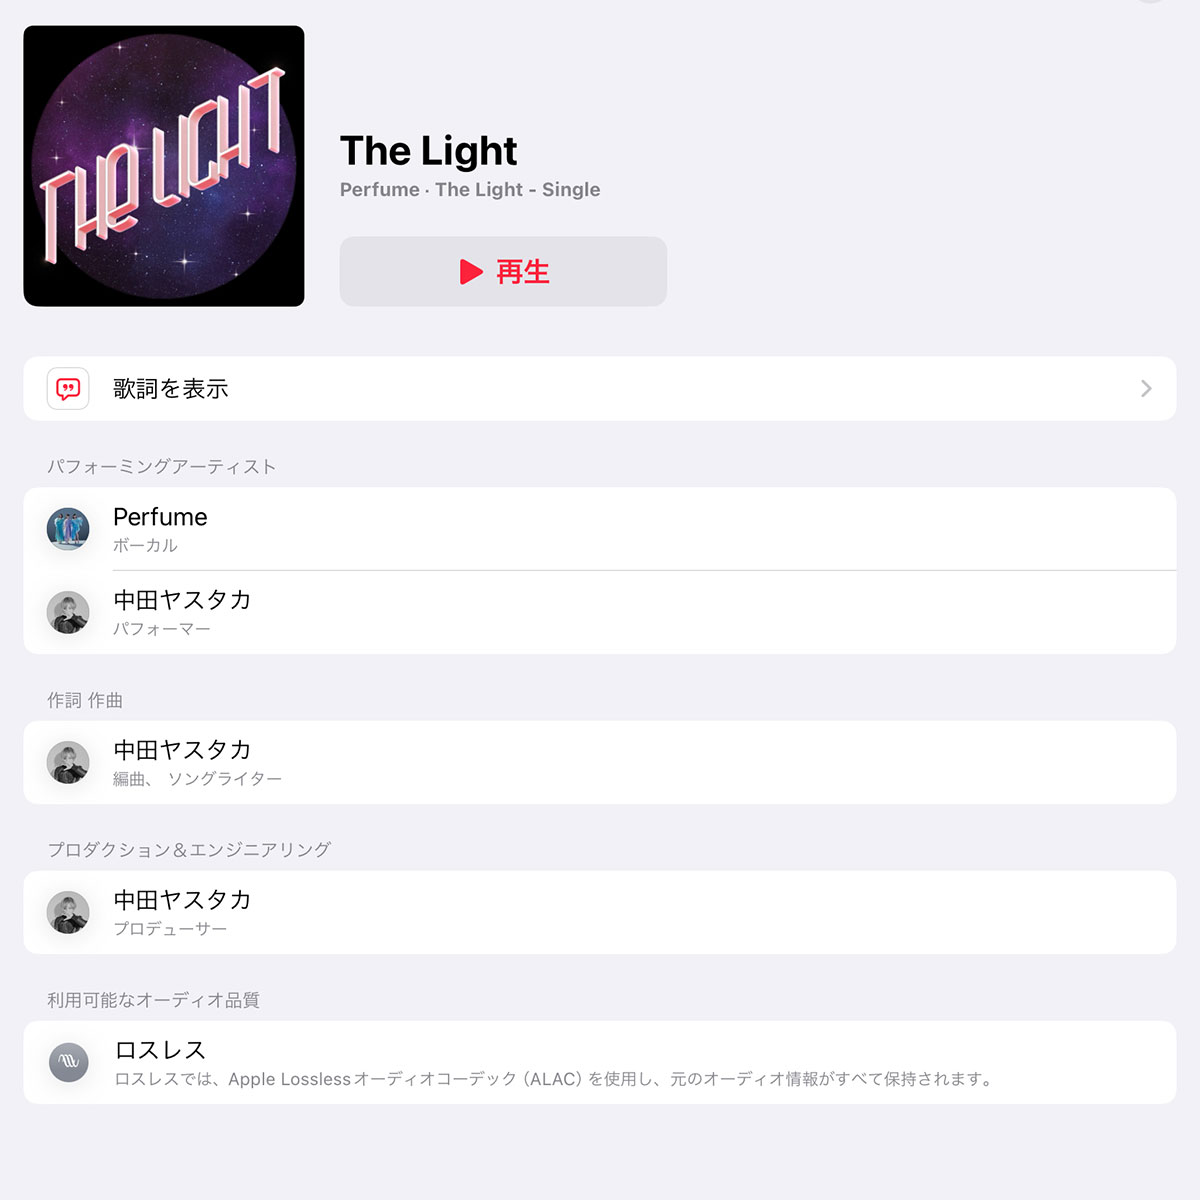 「The Light」の楽曲情報